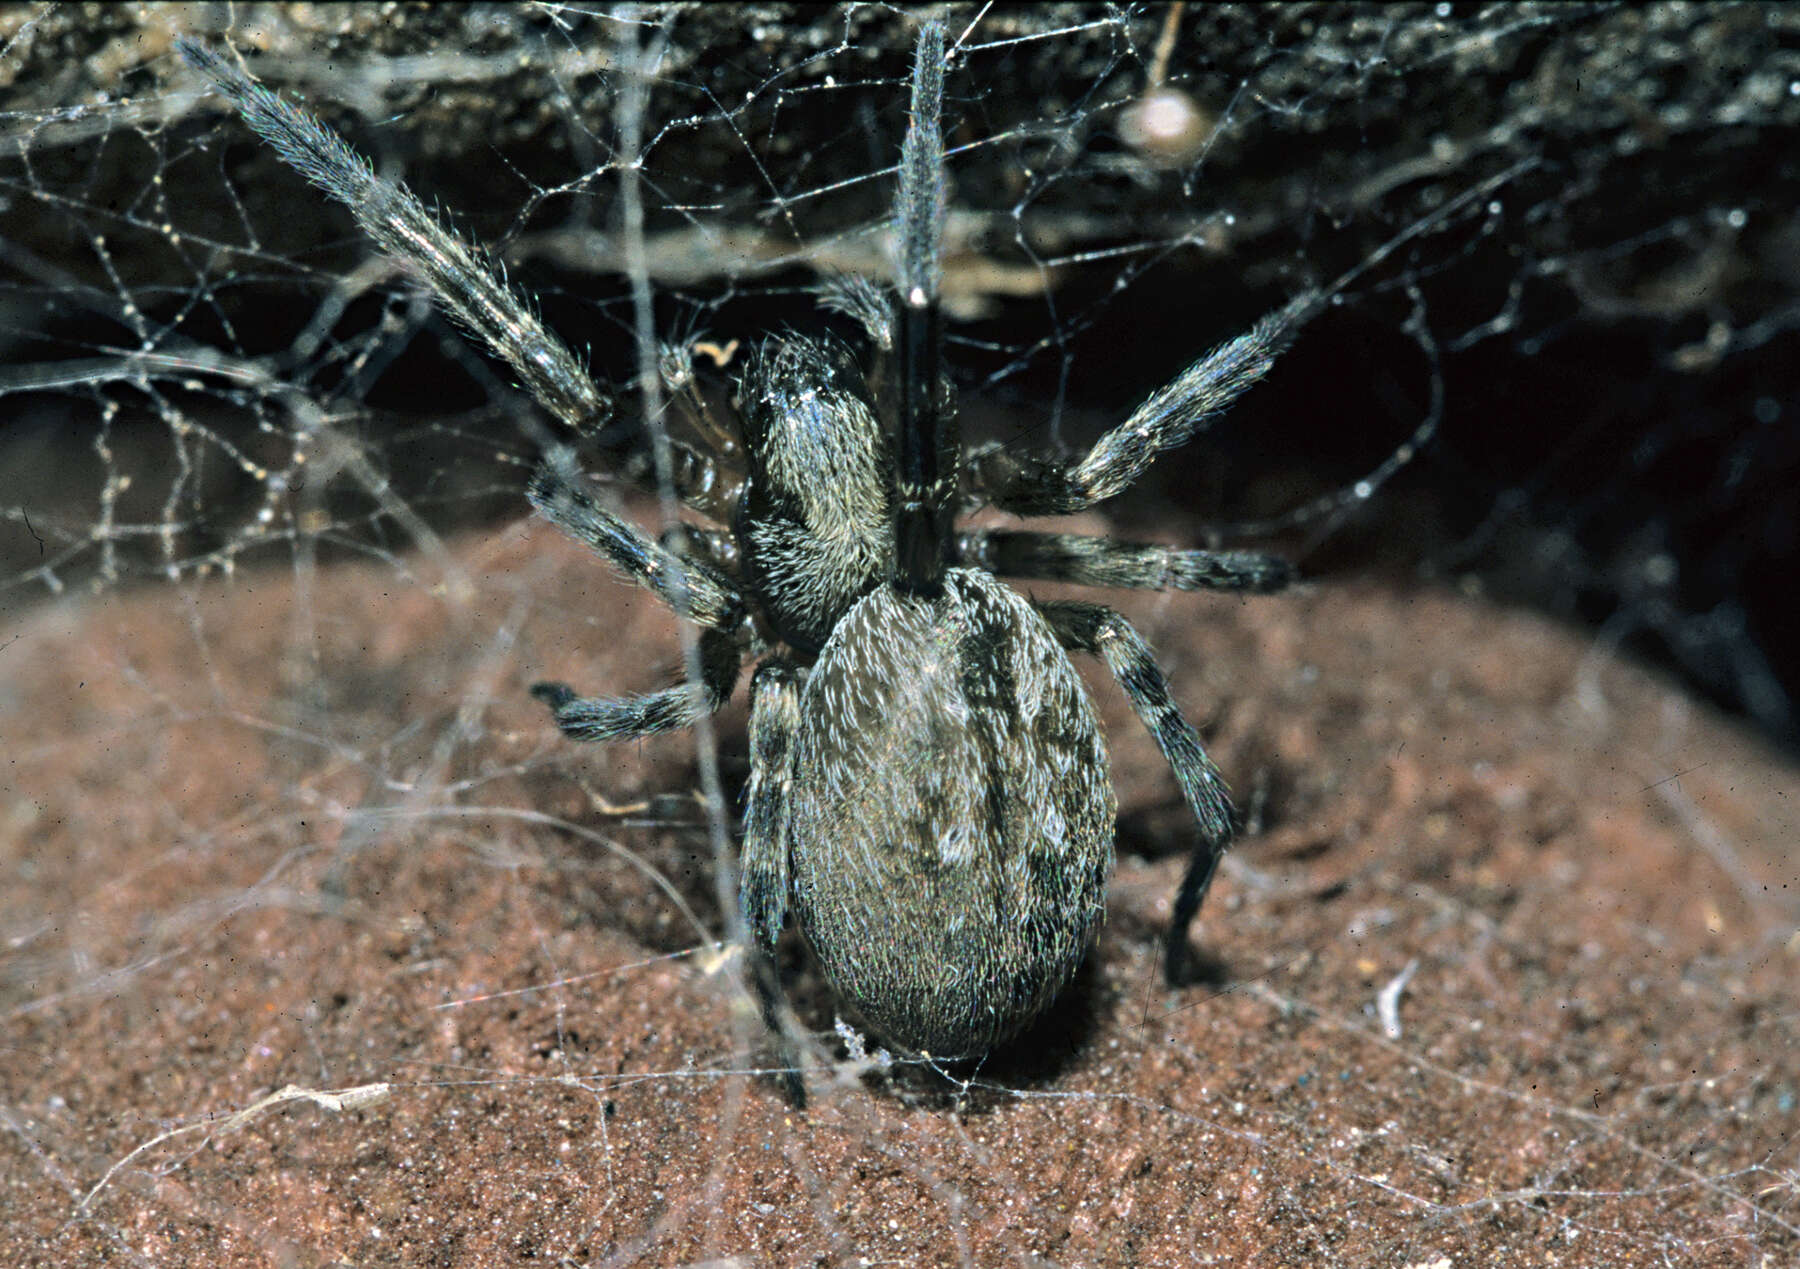 Image of Desid spider